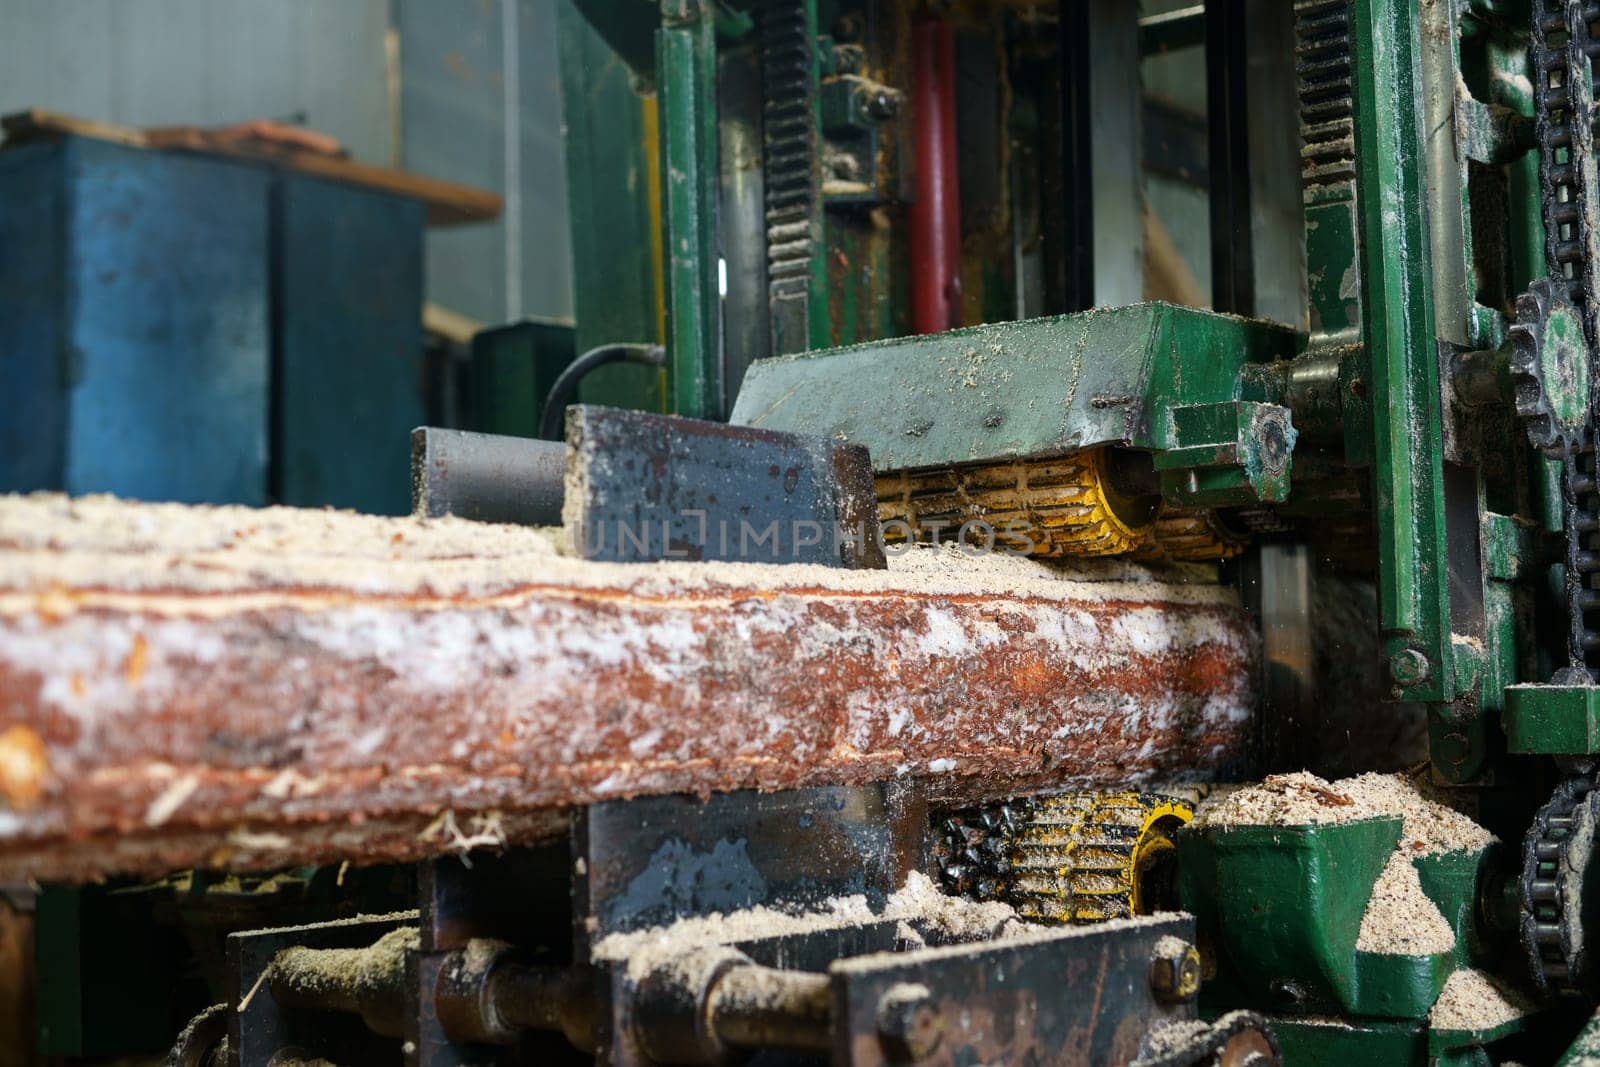 At sawmill. Image of sawing log on machine, close-up